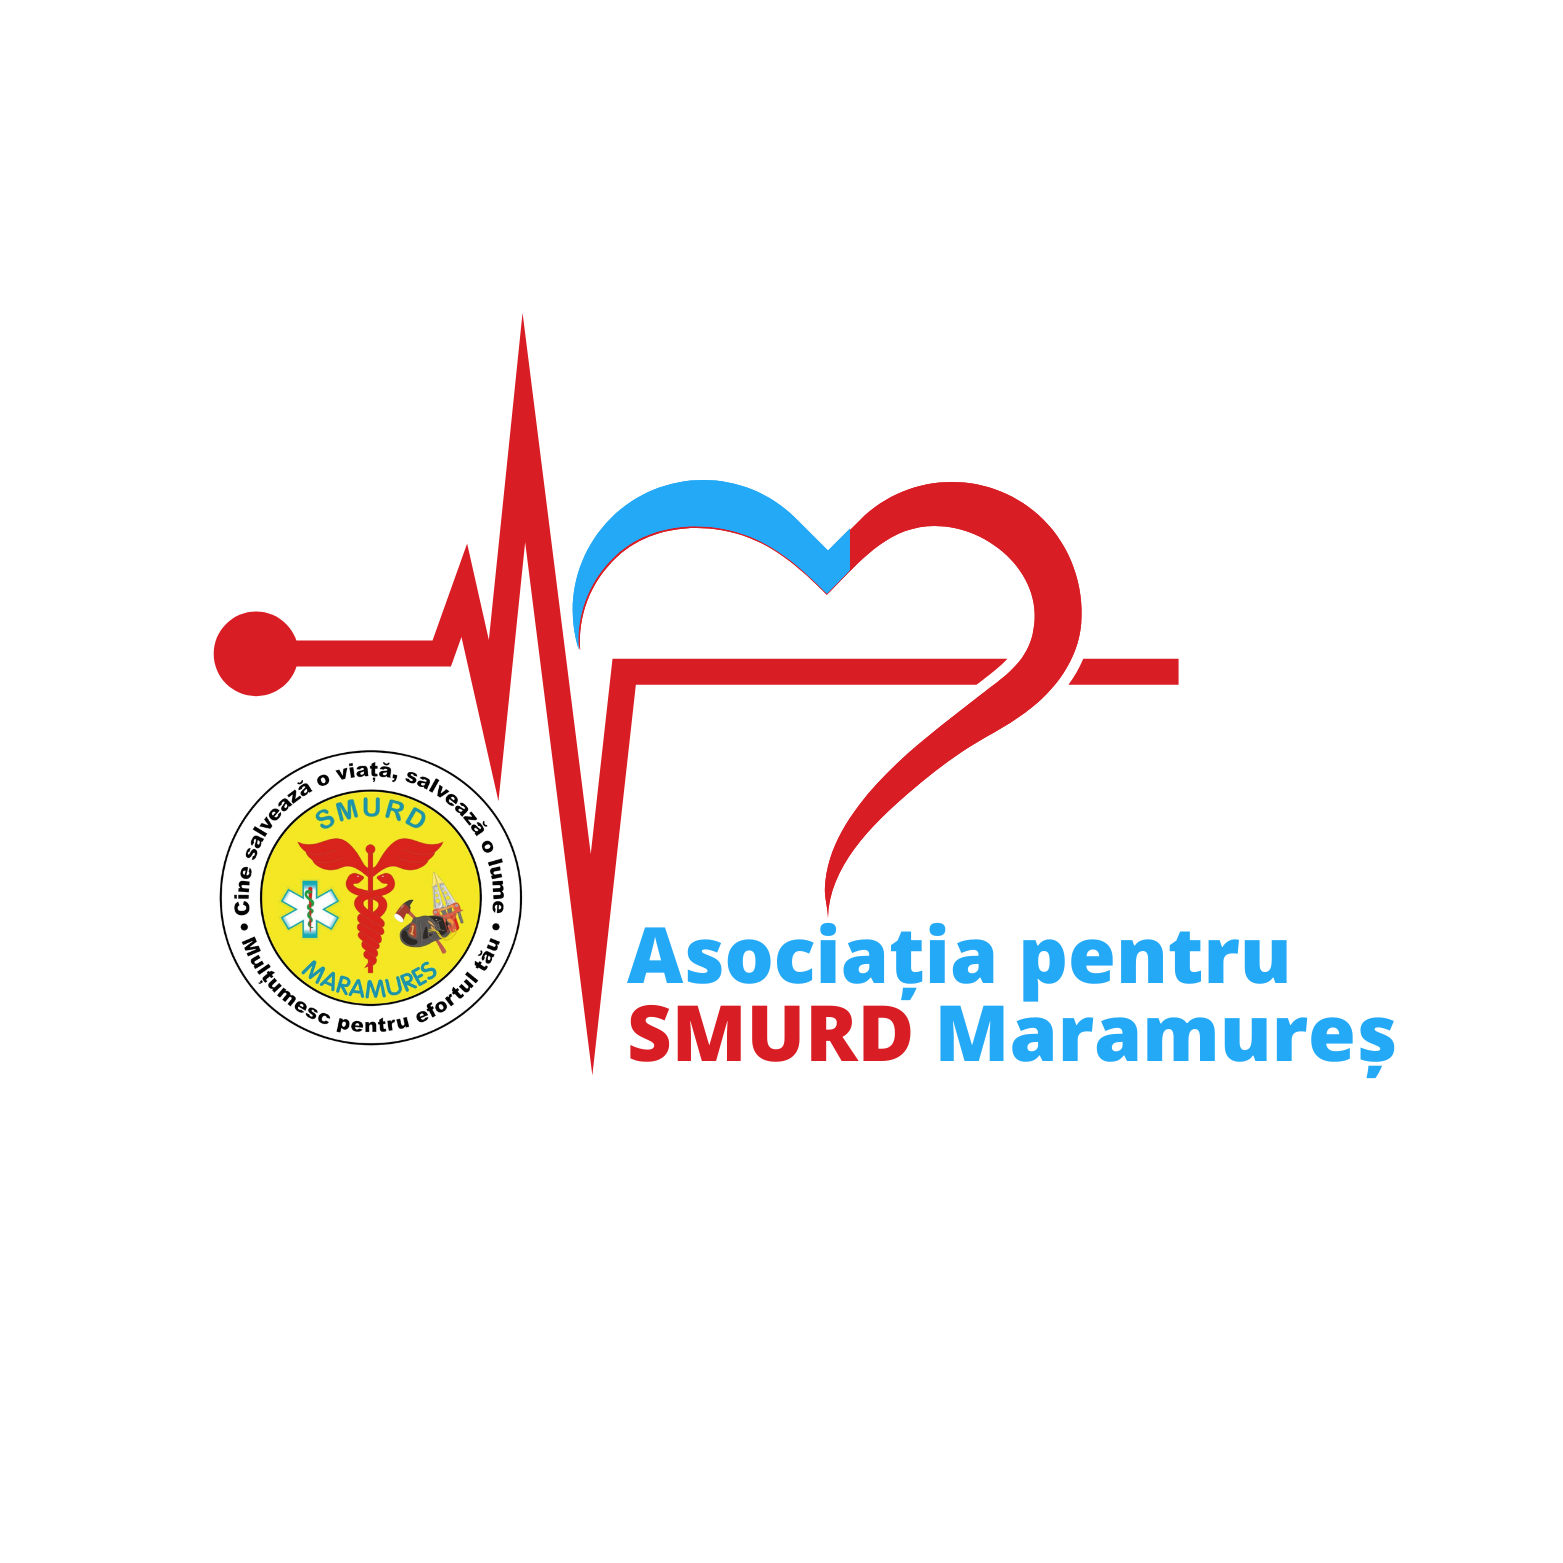 ASOCIATIA PENTRU SMURD MARAMURES logo